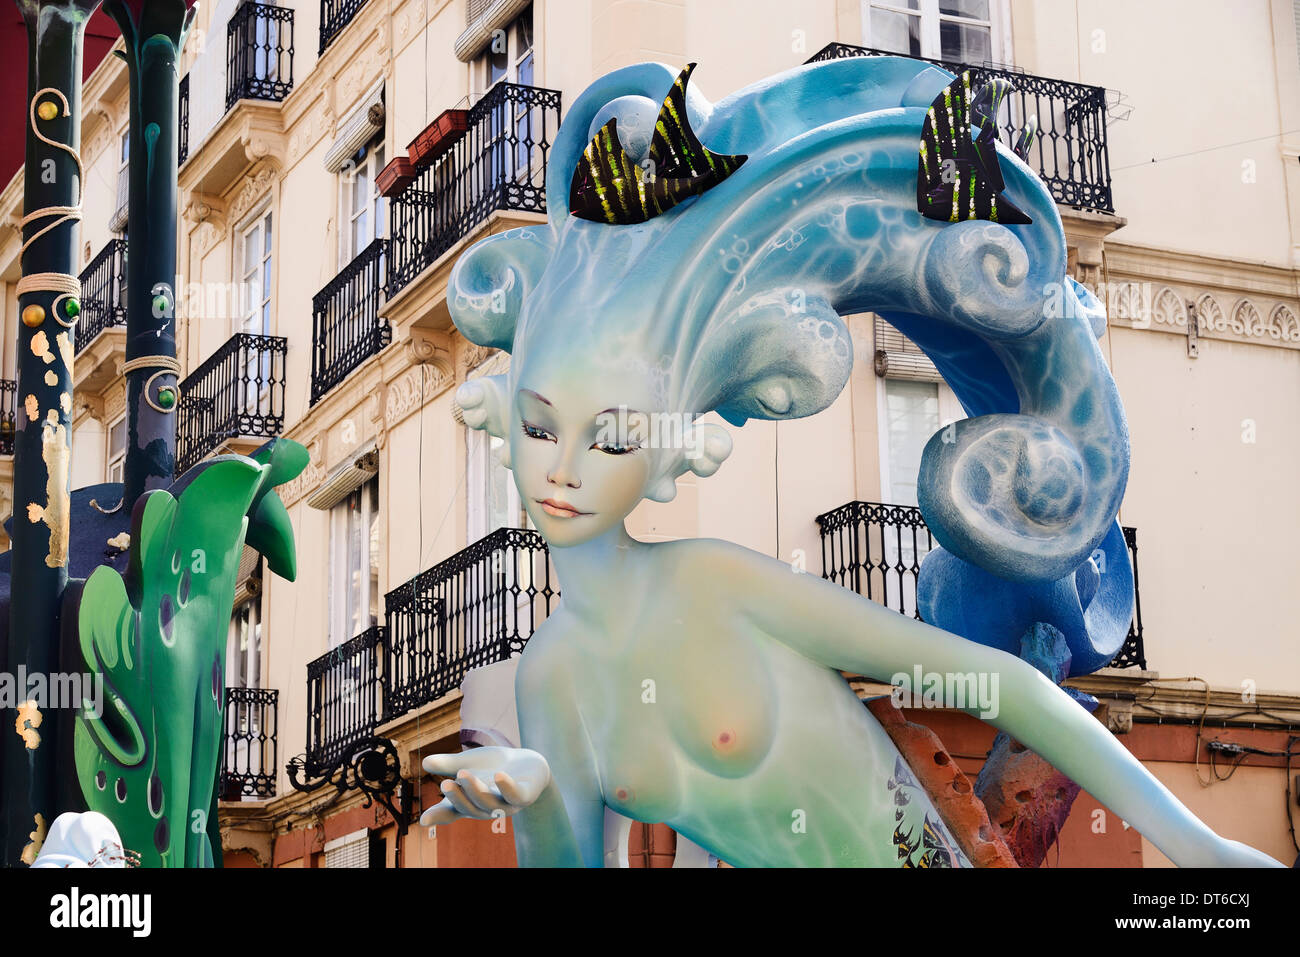 Spain, Valencia Province, Valencia, Papier Mache figure of mermaid in the street during Las Fallas festival. Stock Photo